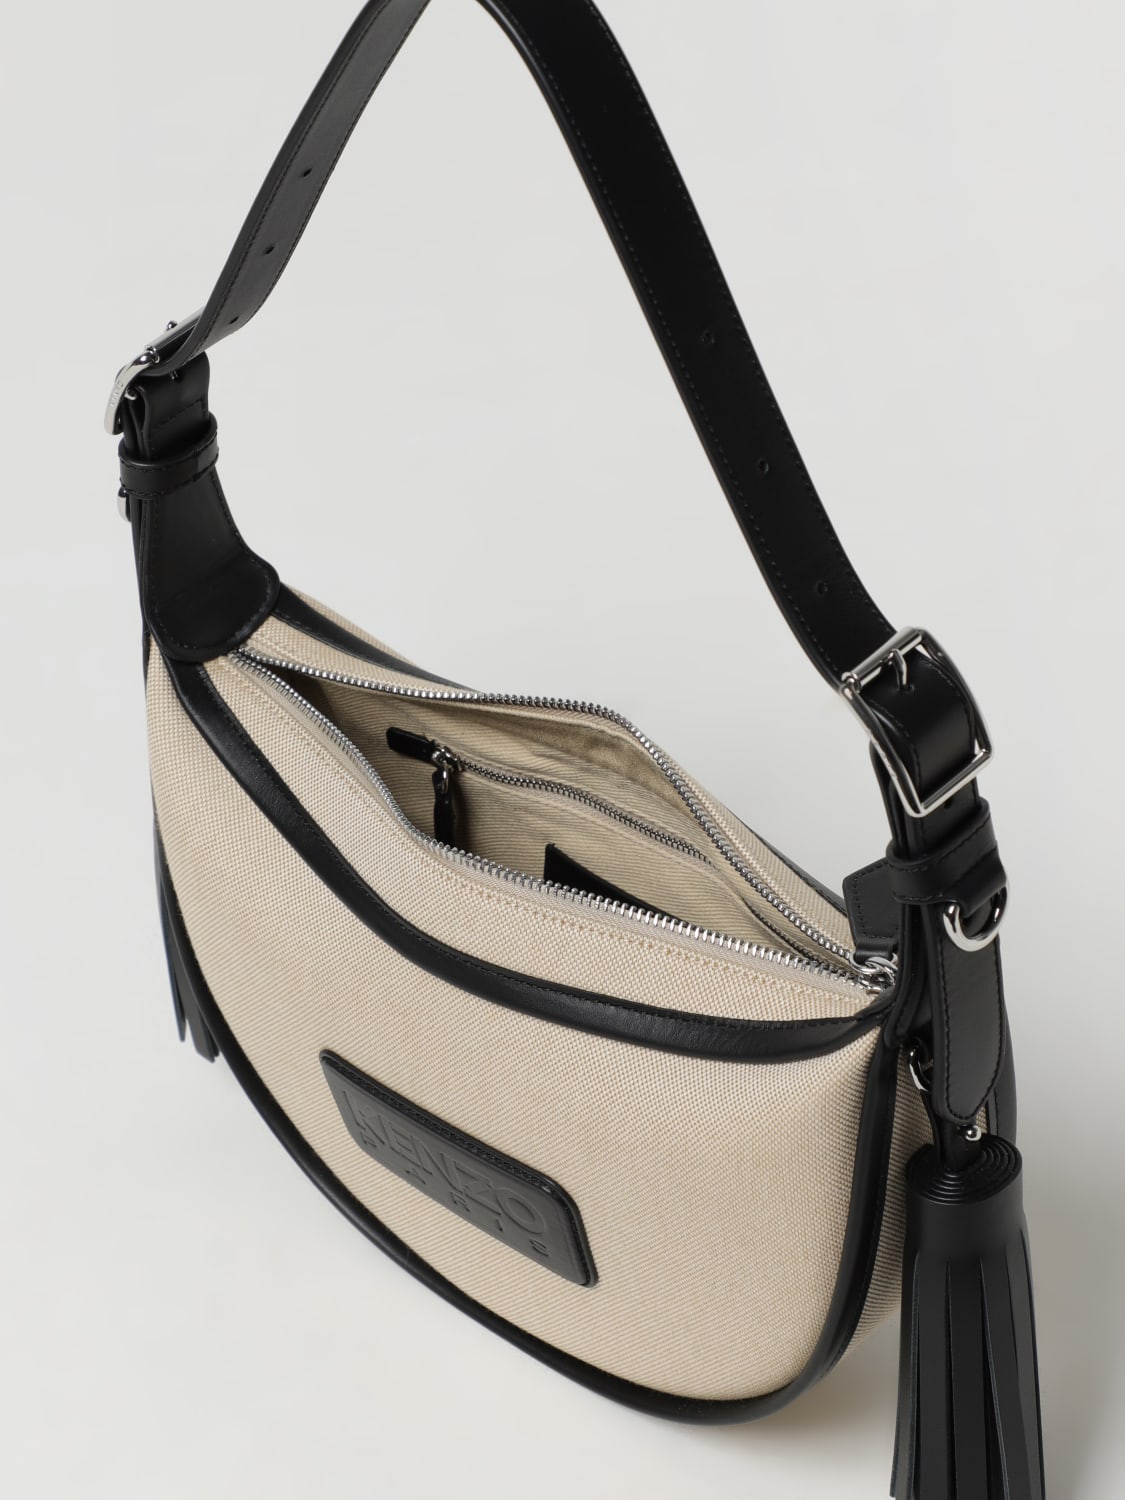 KENZO: Hobo bag in cotton canvas - Black | KENZO shoulder bag ...